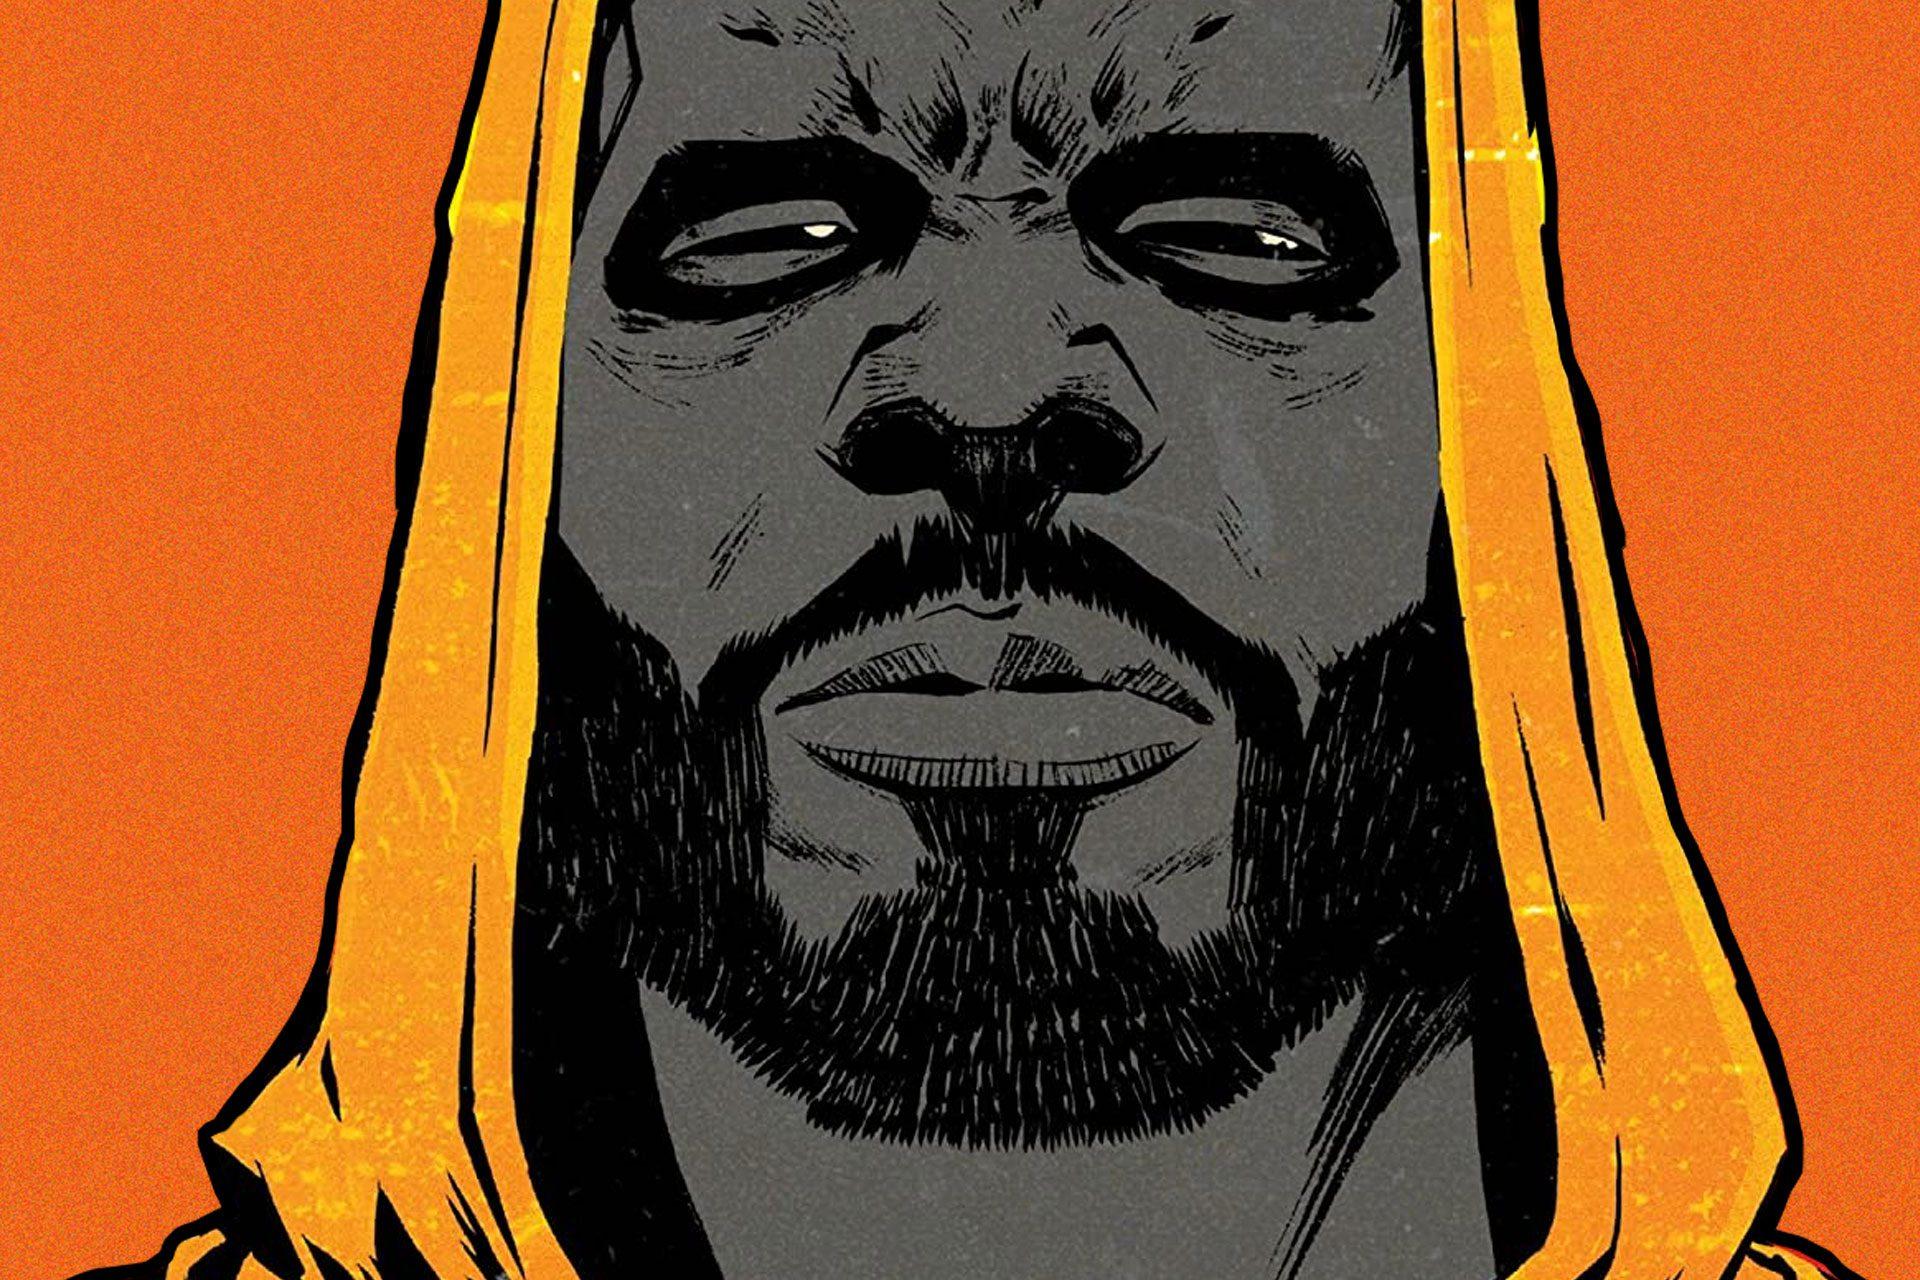 Luke Cage a.k.a Power Man - Black Superheroes